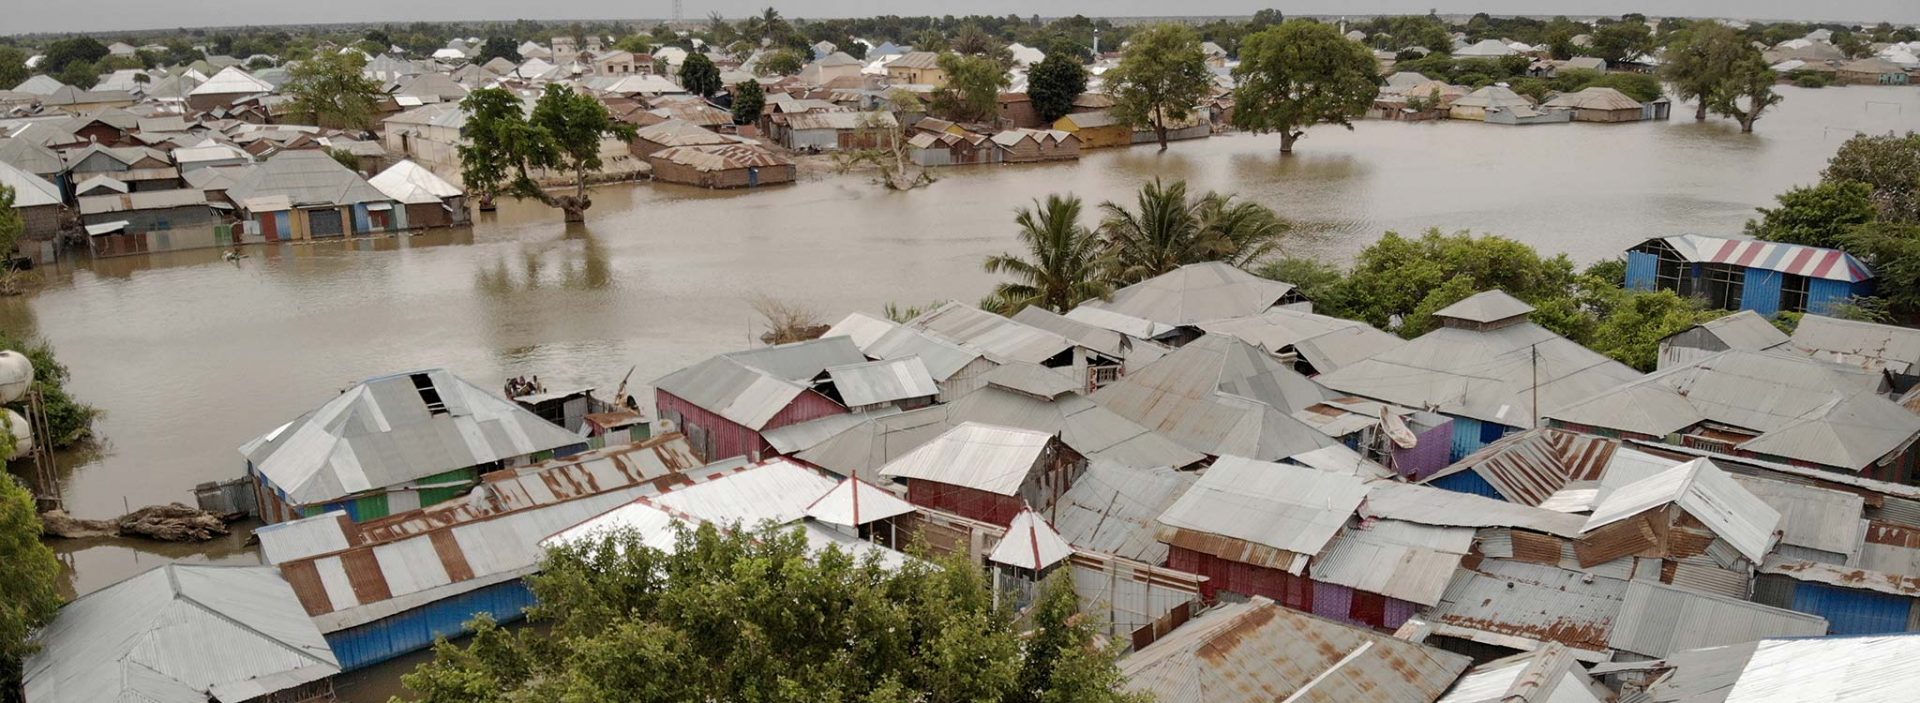 Flash floods in Somalia.